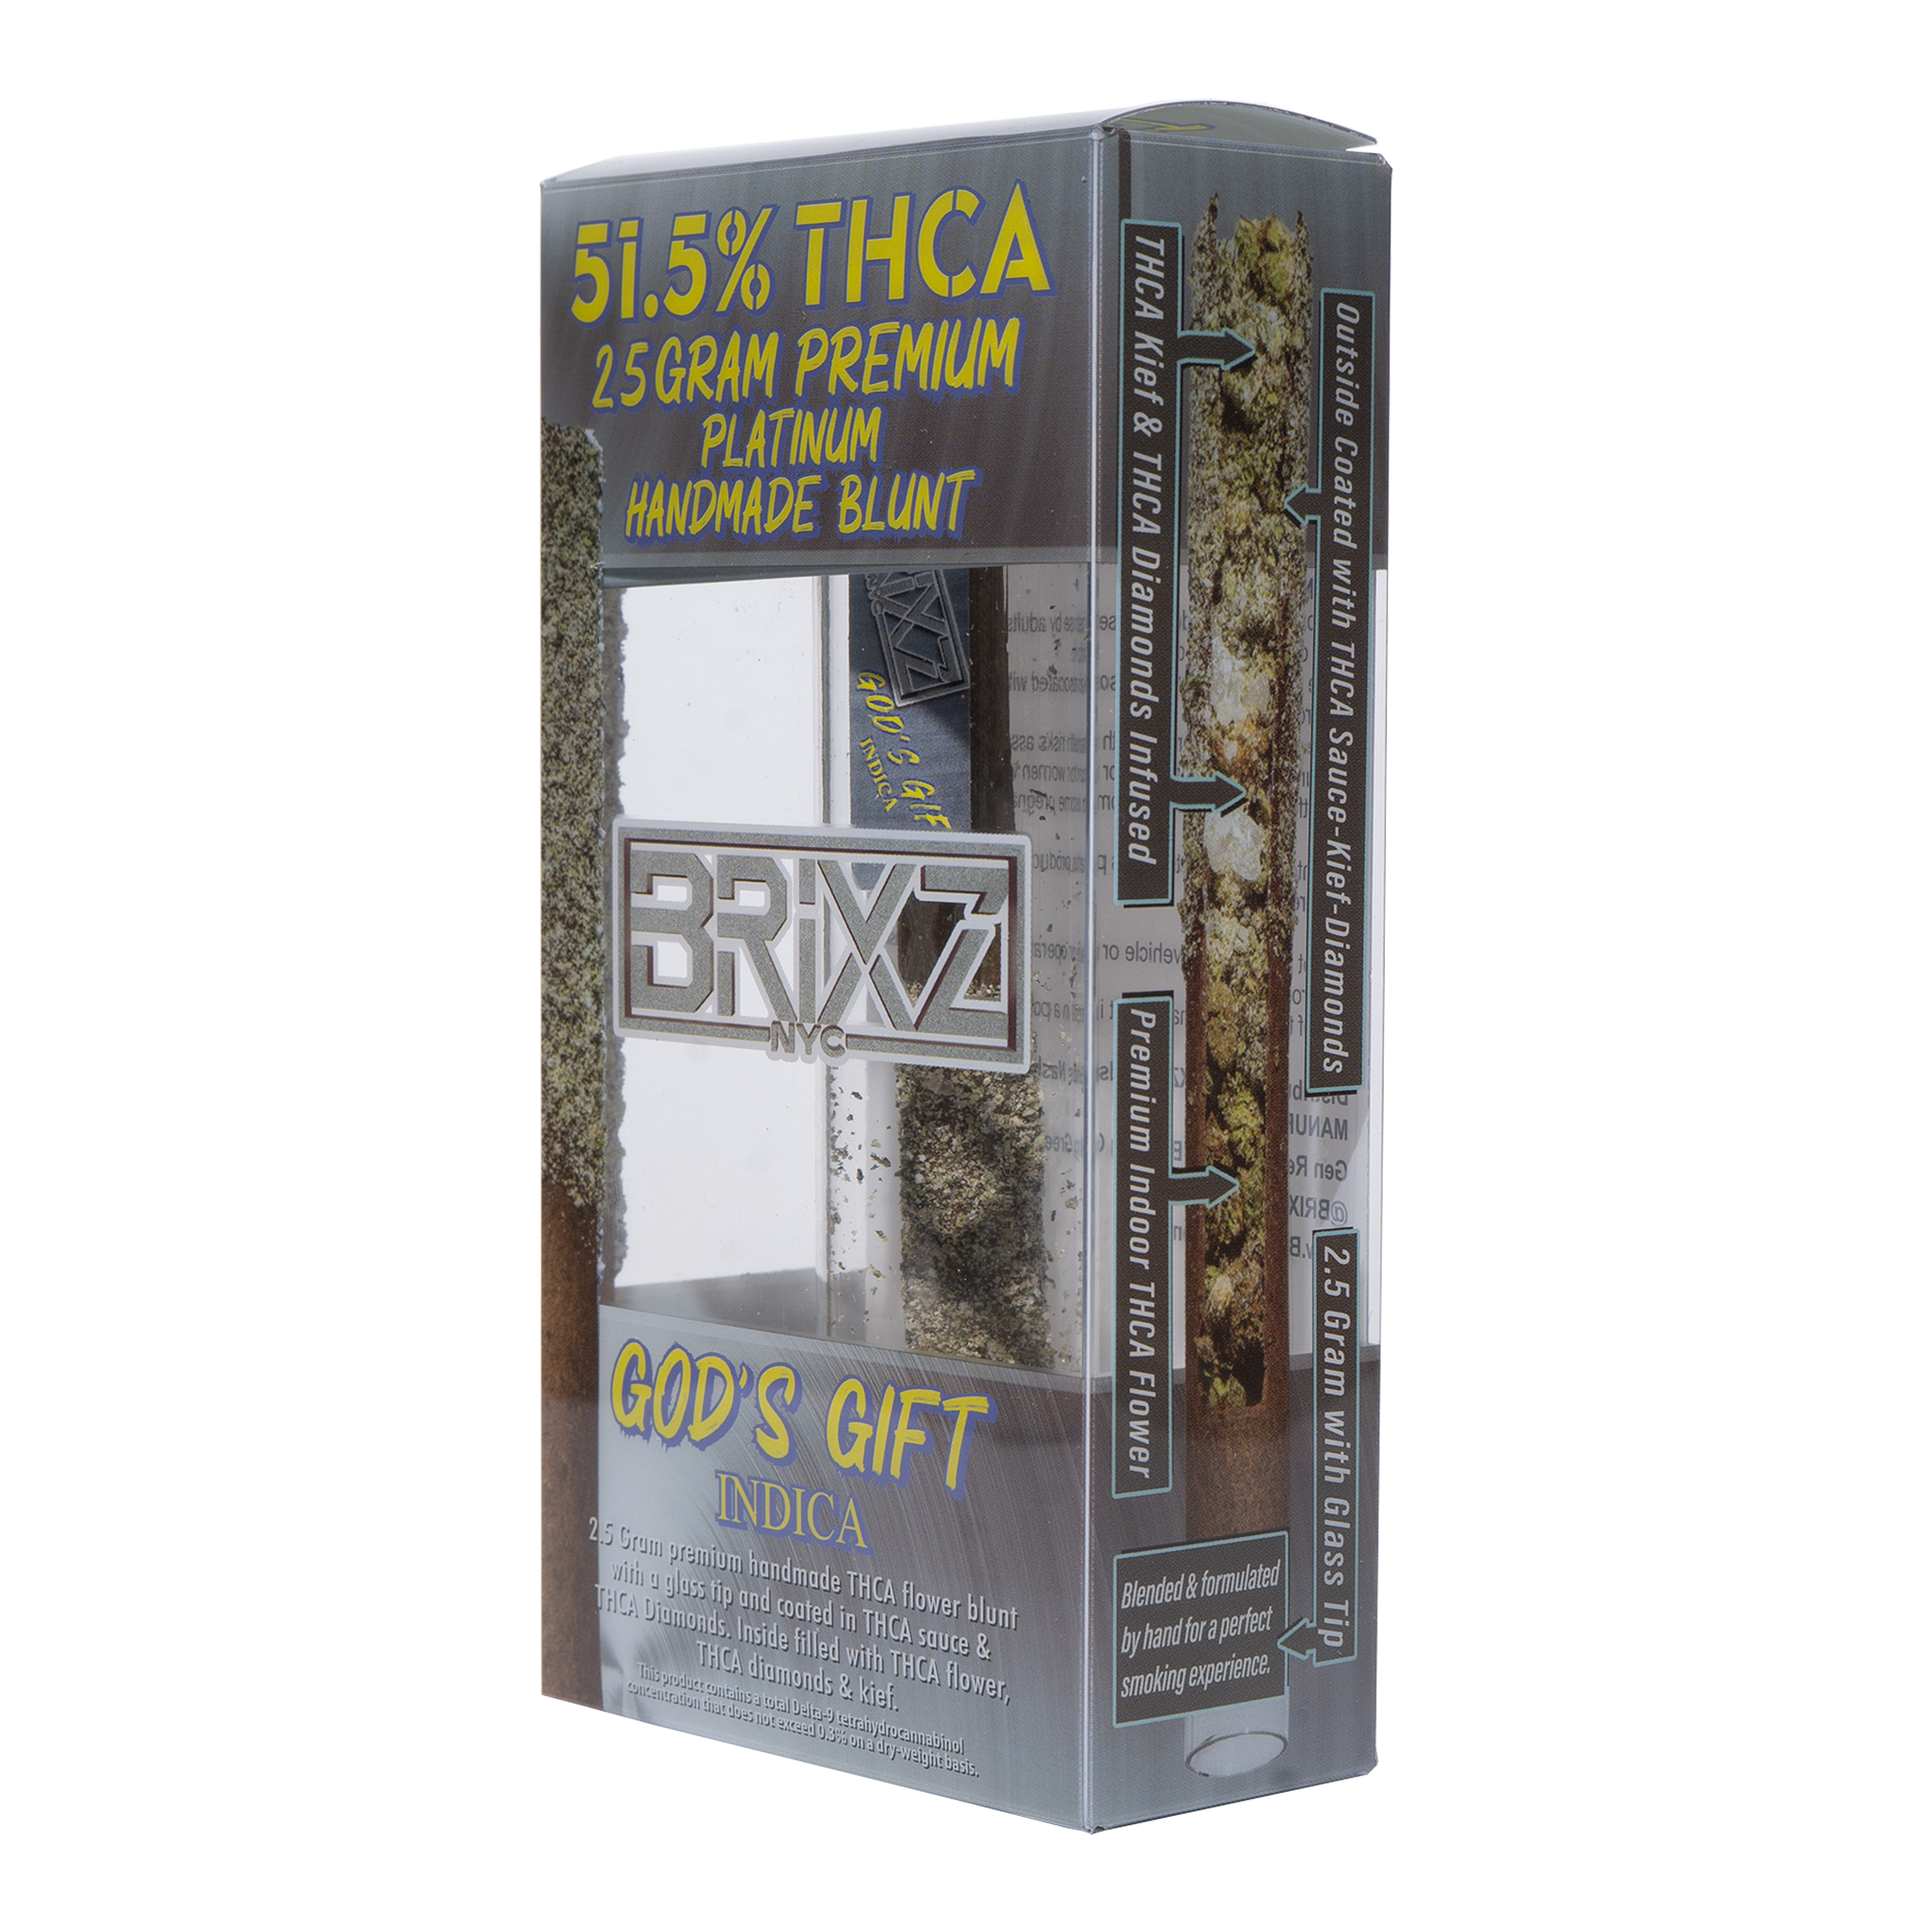 BRIXZ Platinum THCA Pre Roll - God's Gift [2.5G]